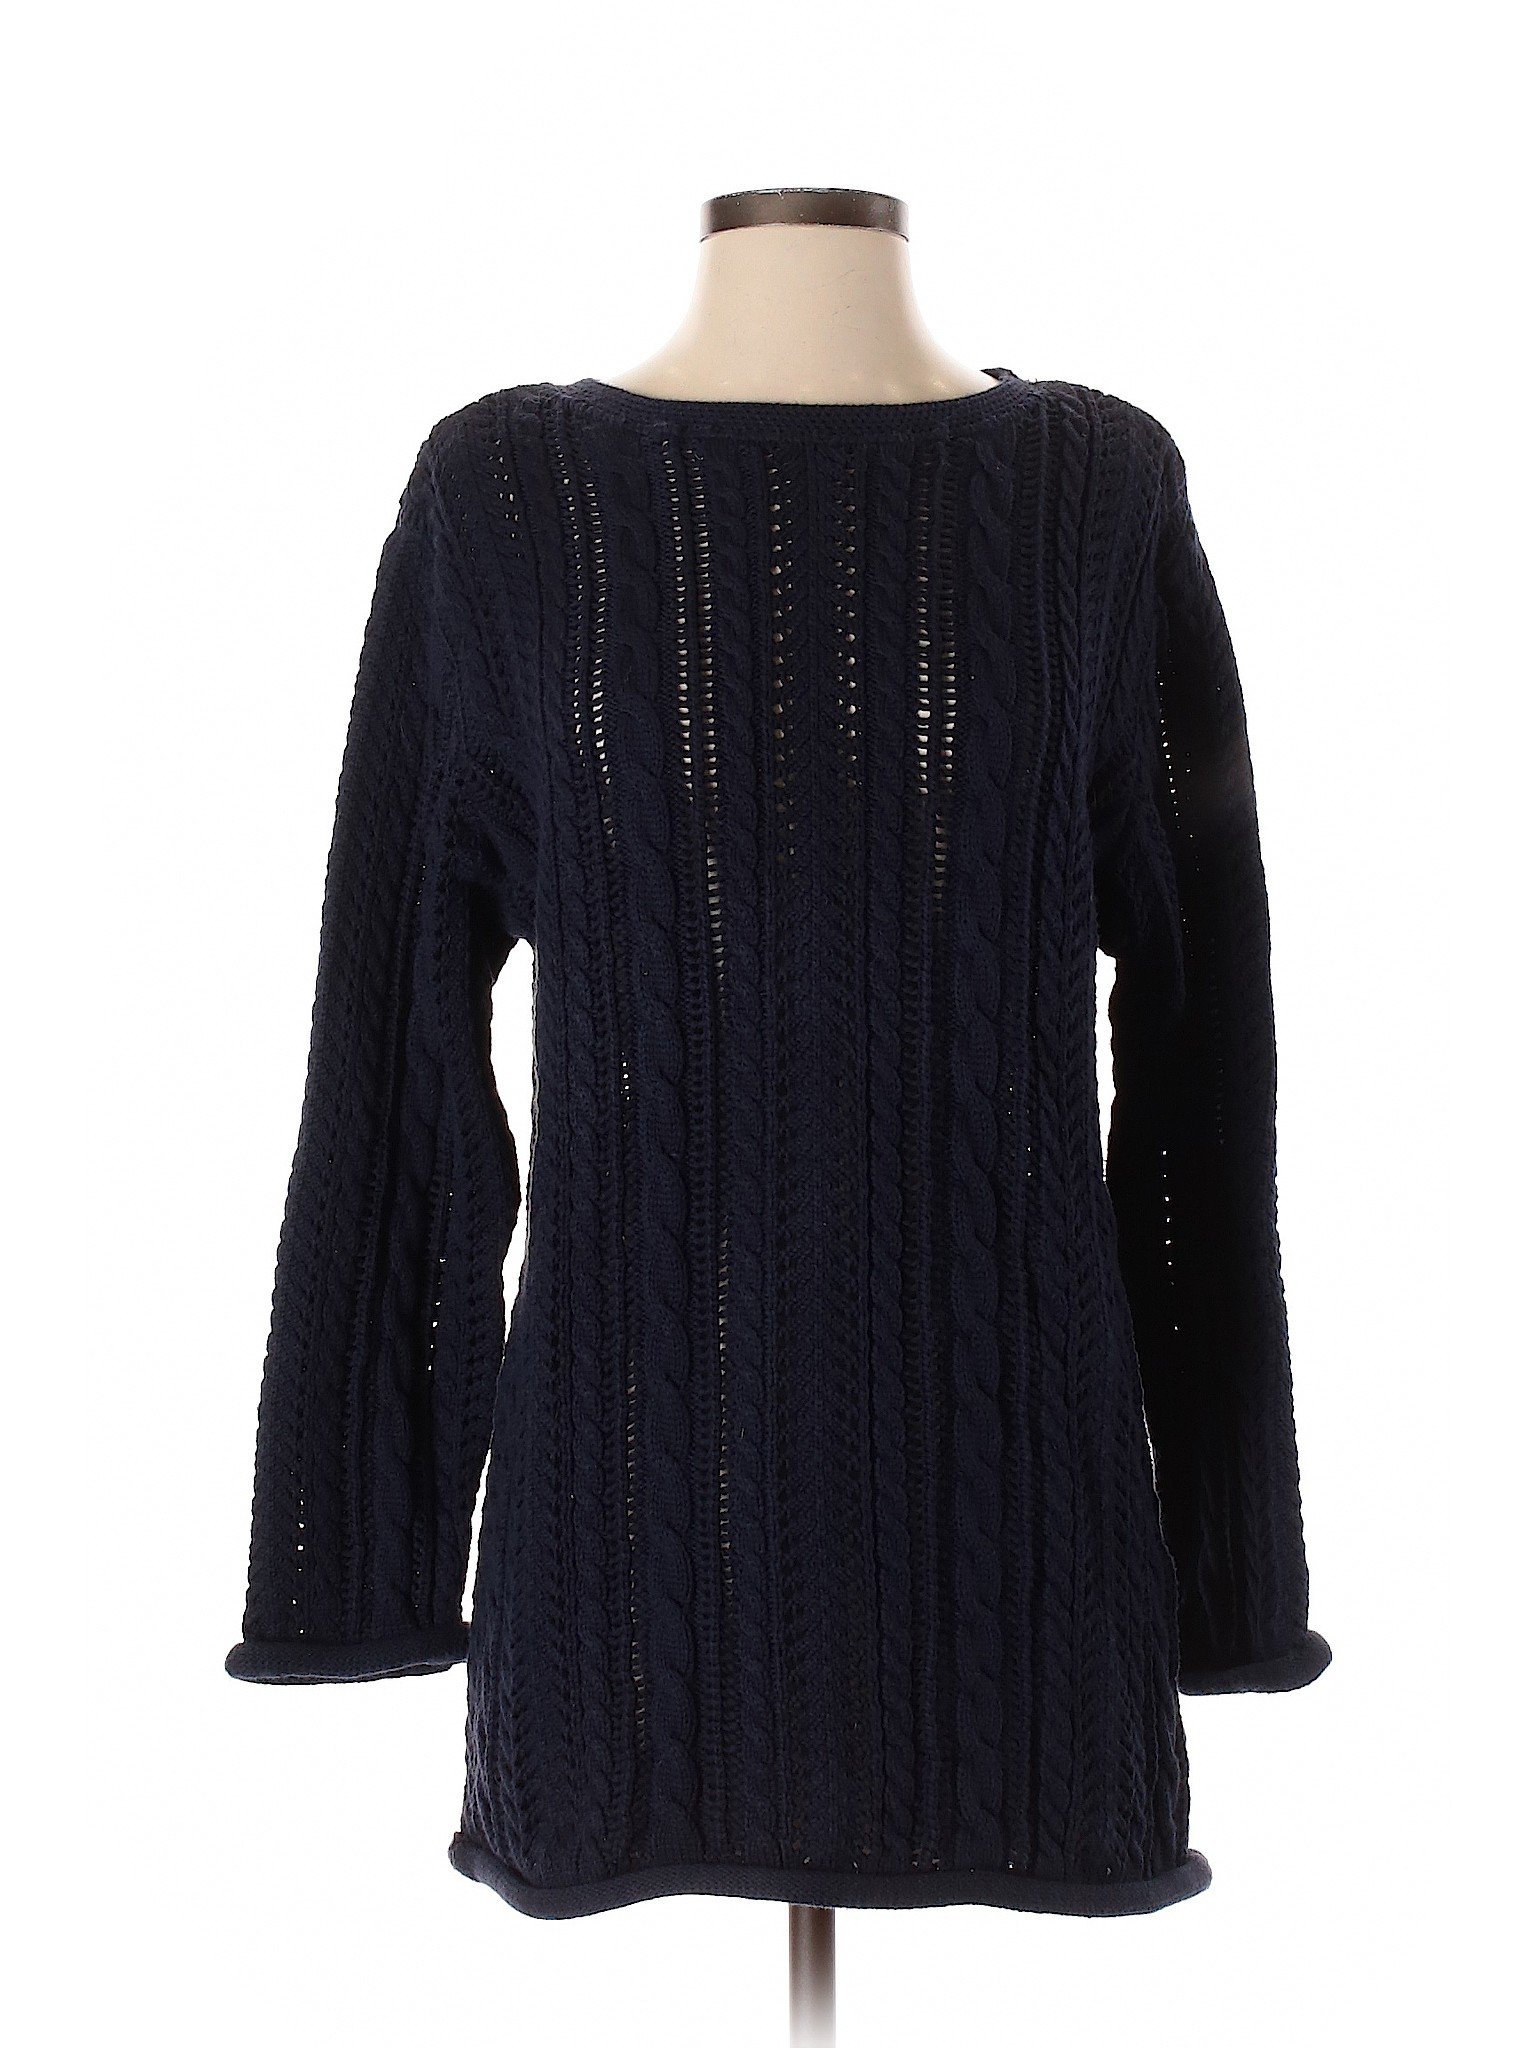 J.Crew Women Black Pullover Sweater S | eBay